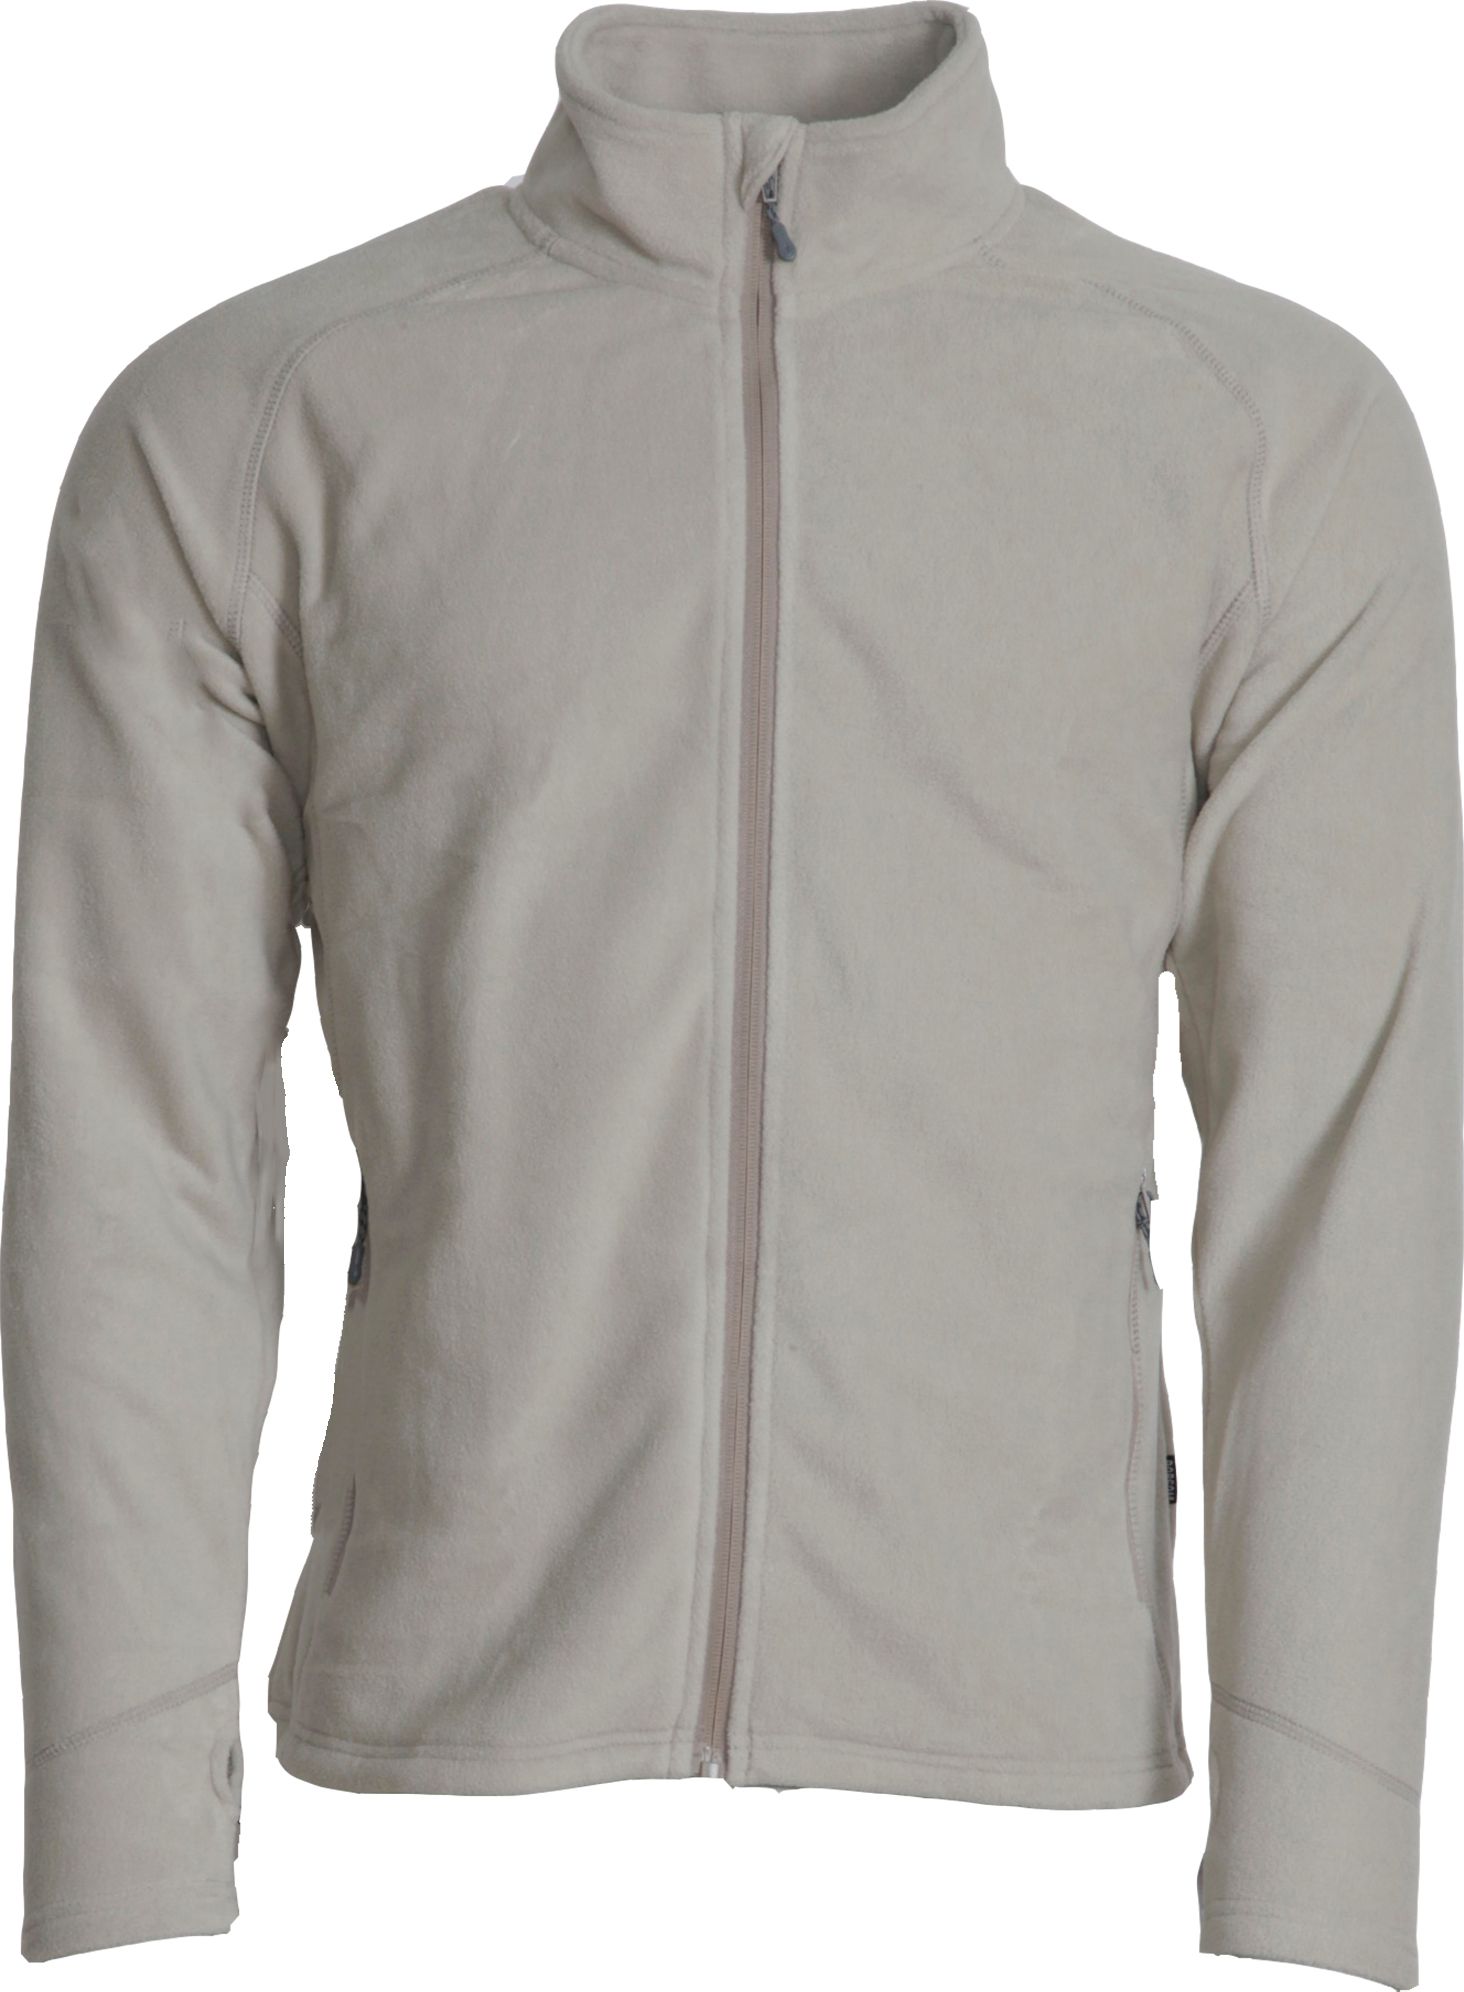 Men's Pescara Fleece Jacket Khaki